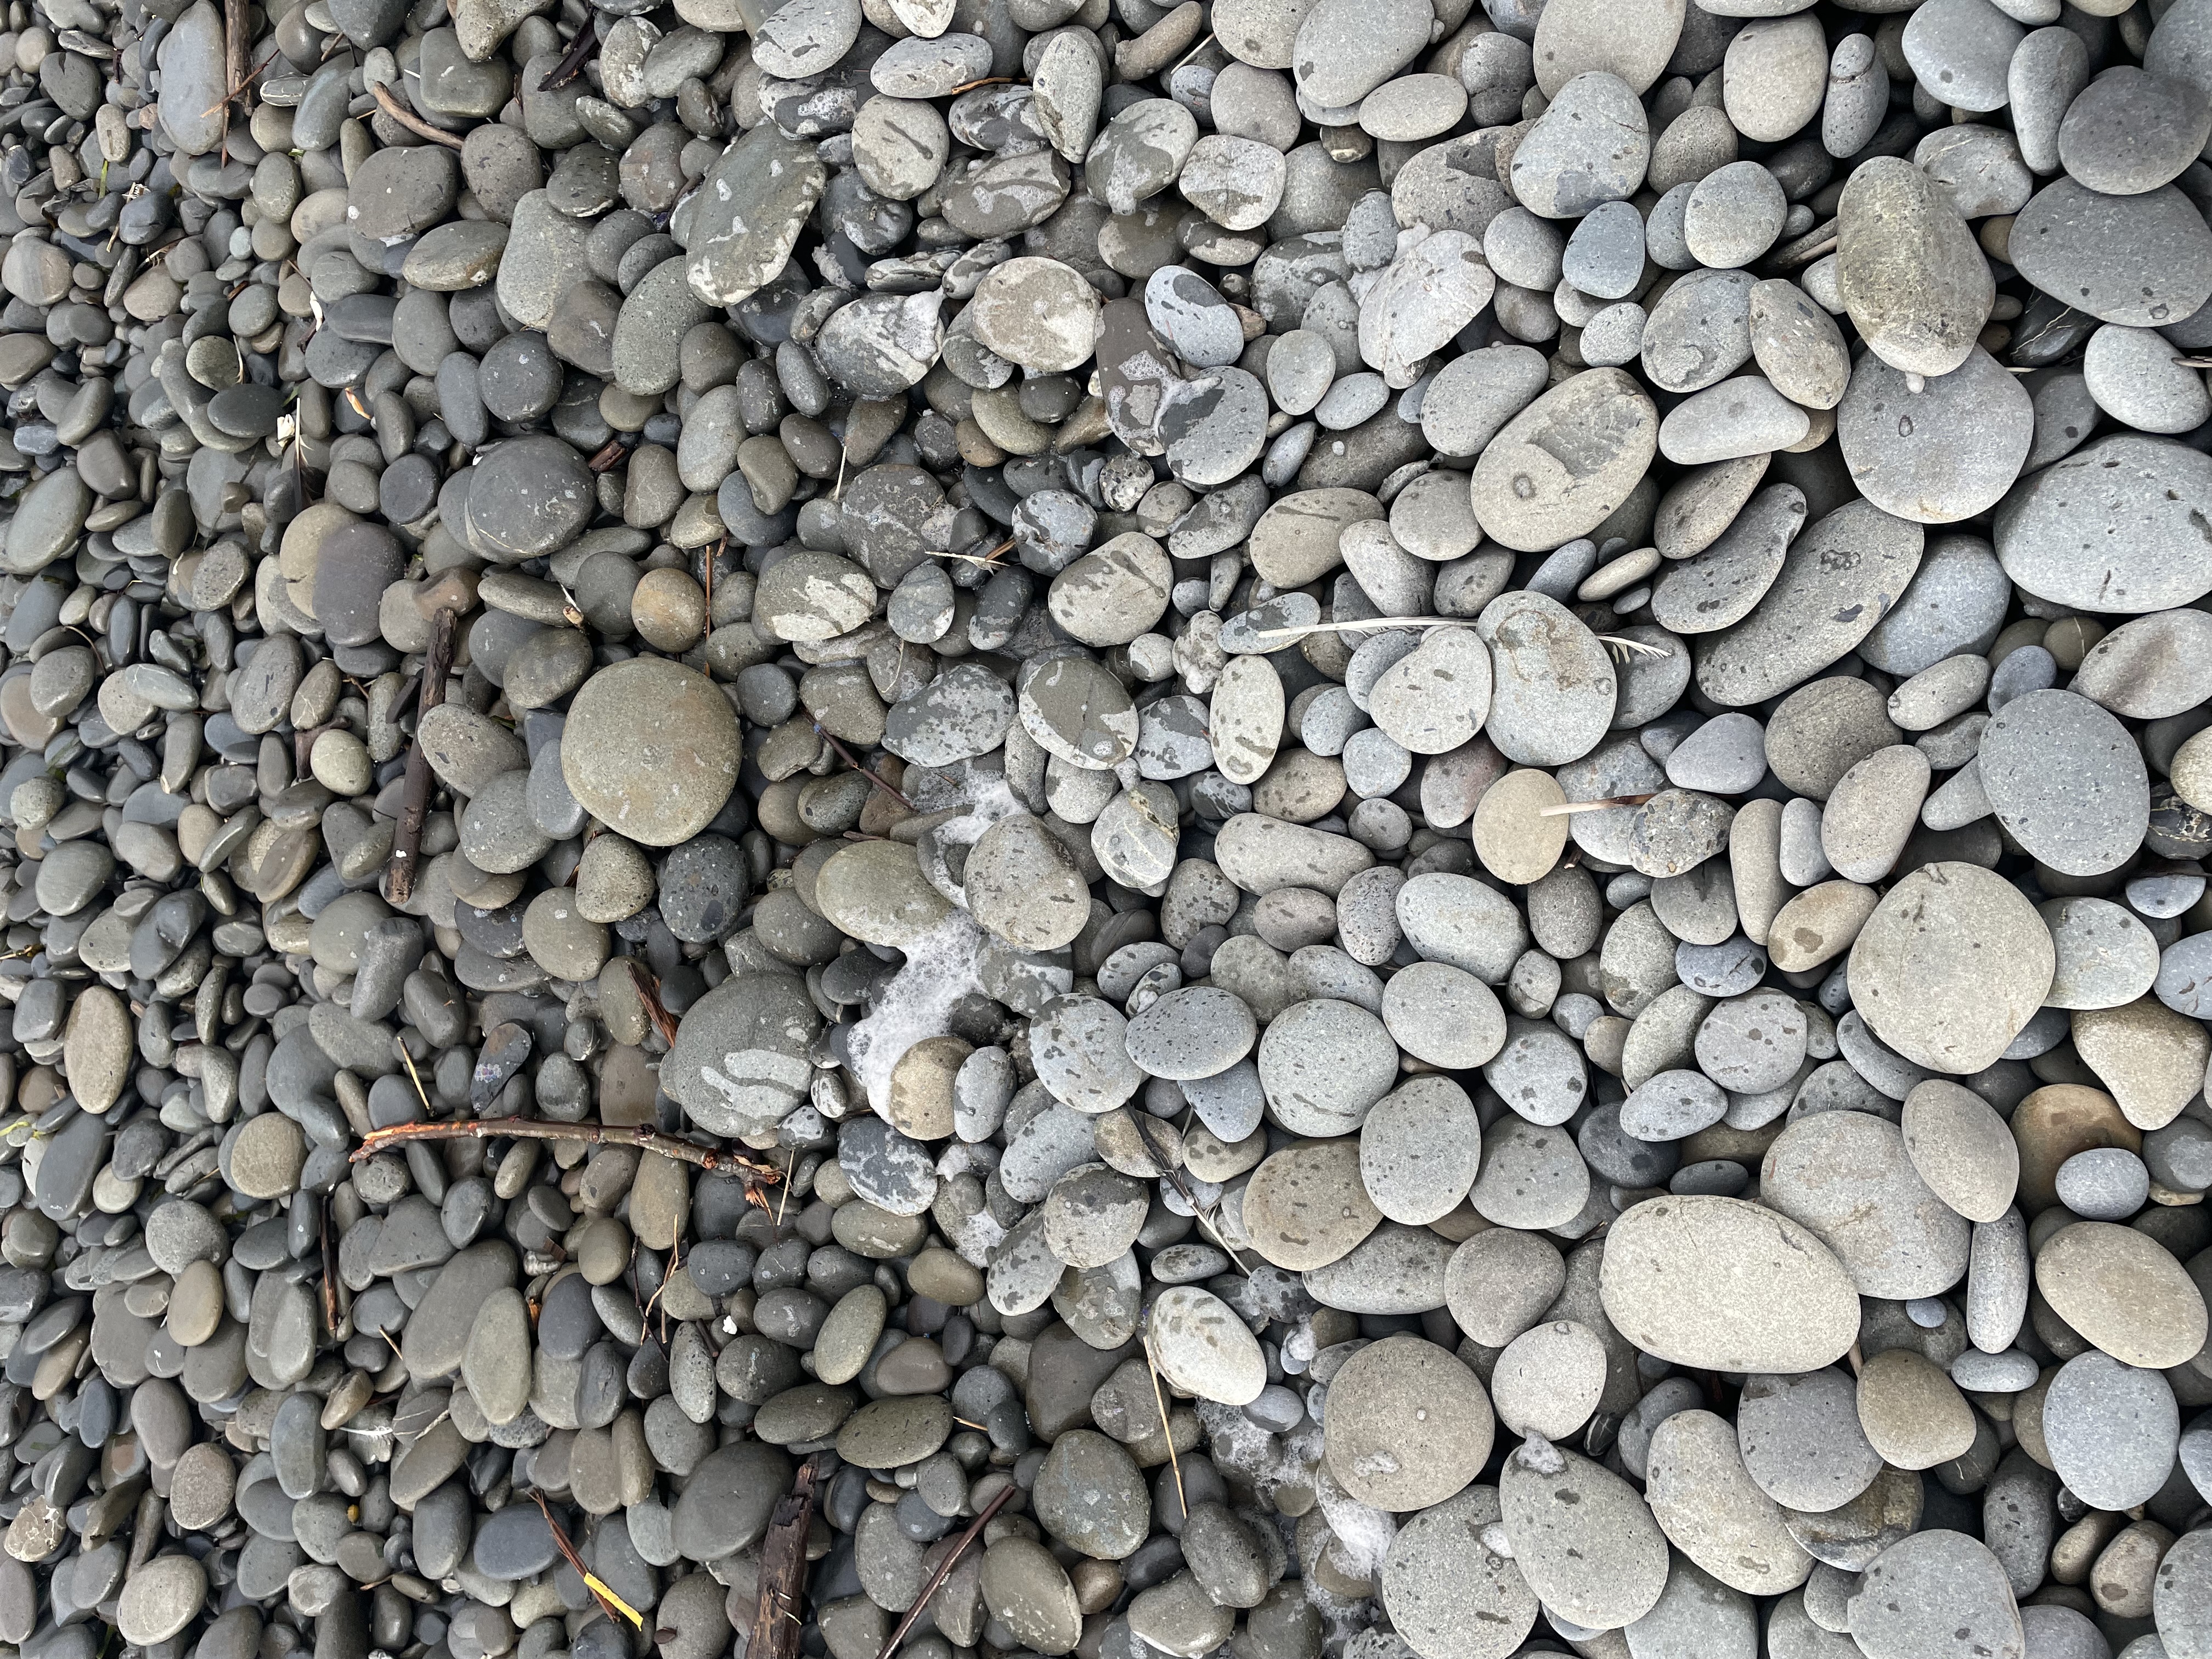 photo of rocks on the same beach